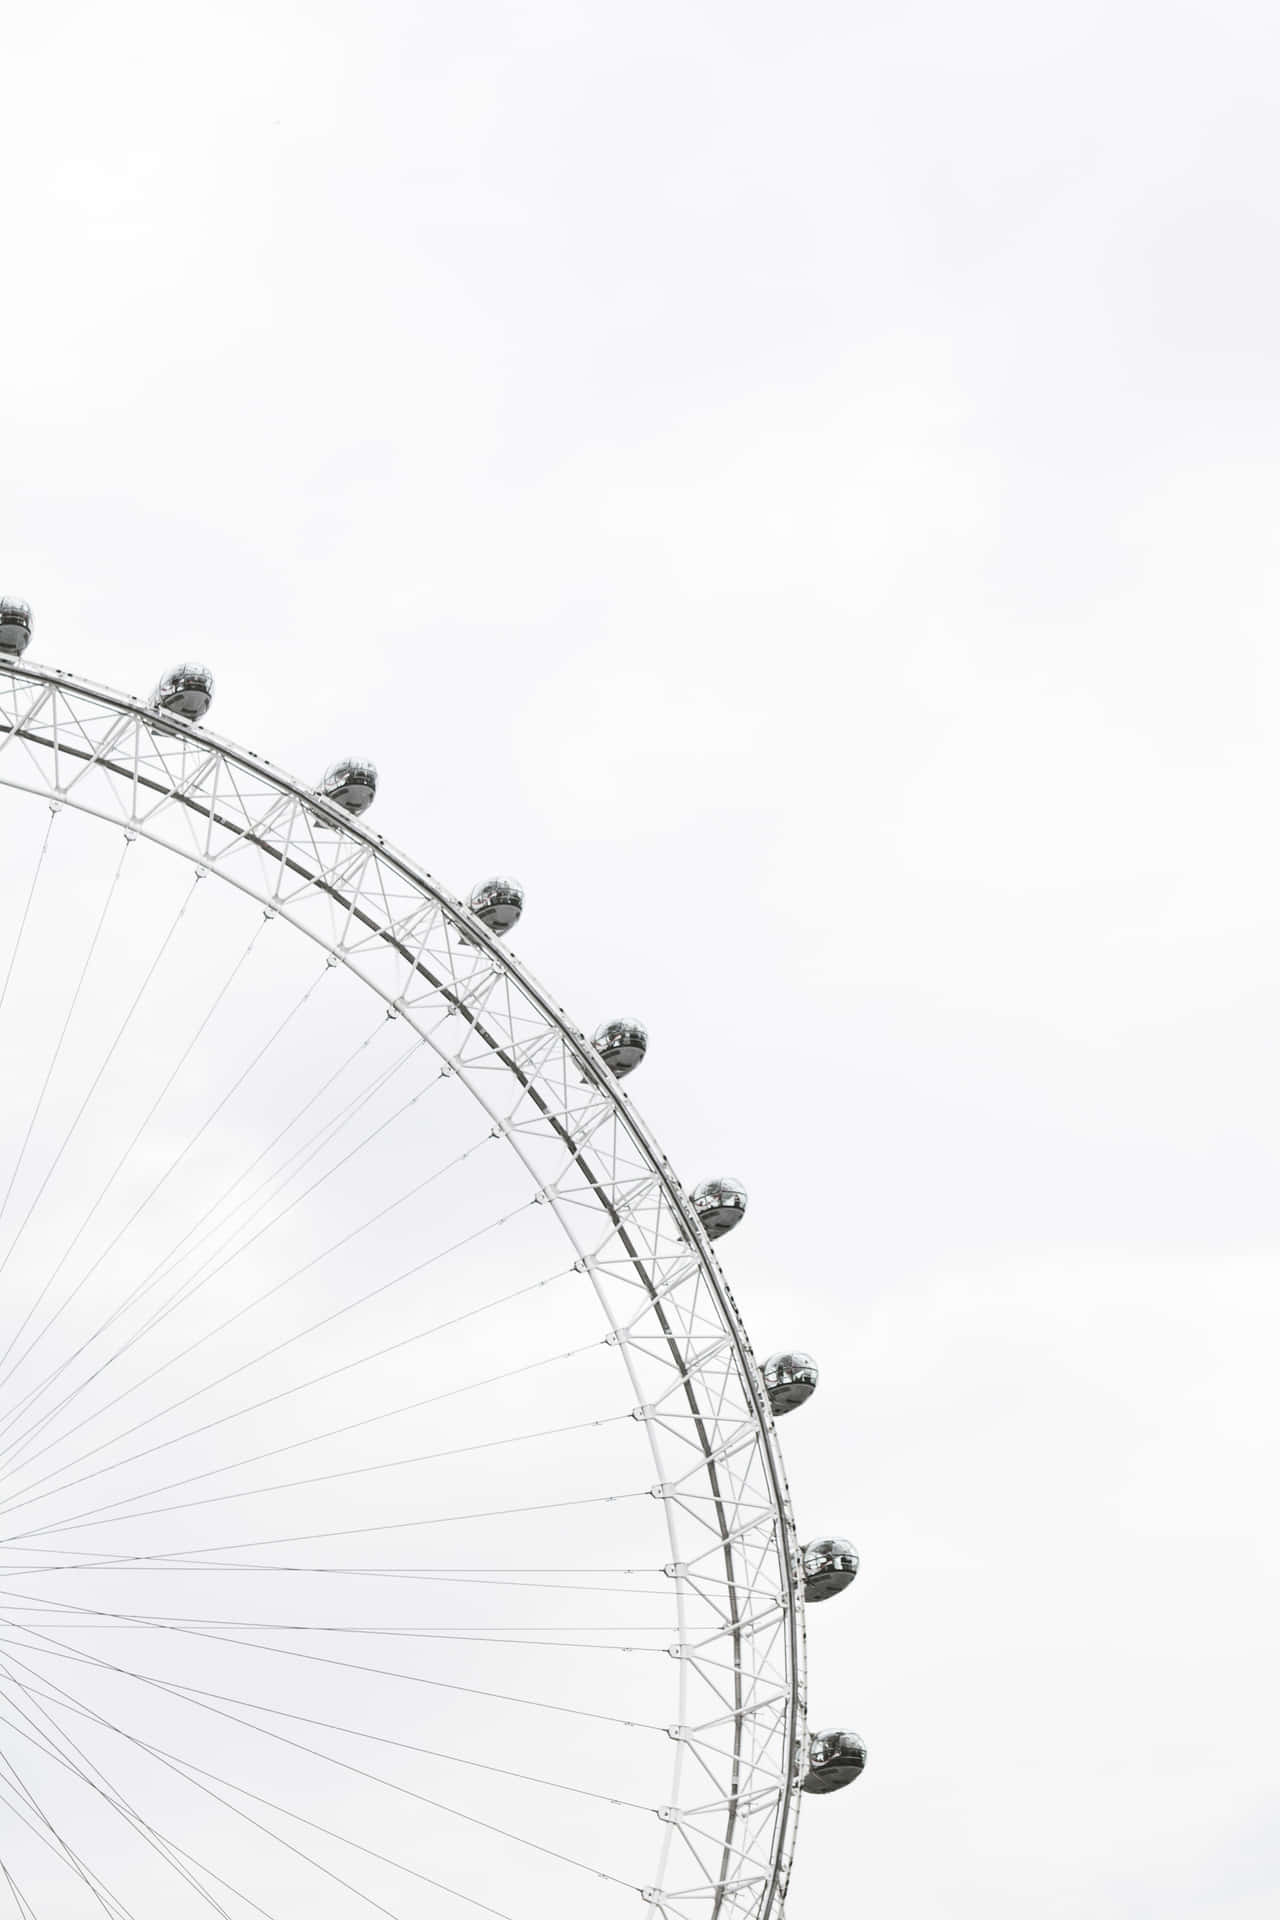 White Image Background Ferris Wheel